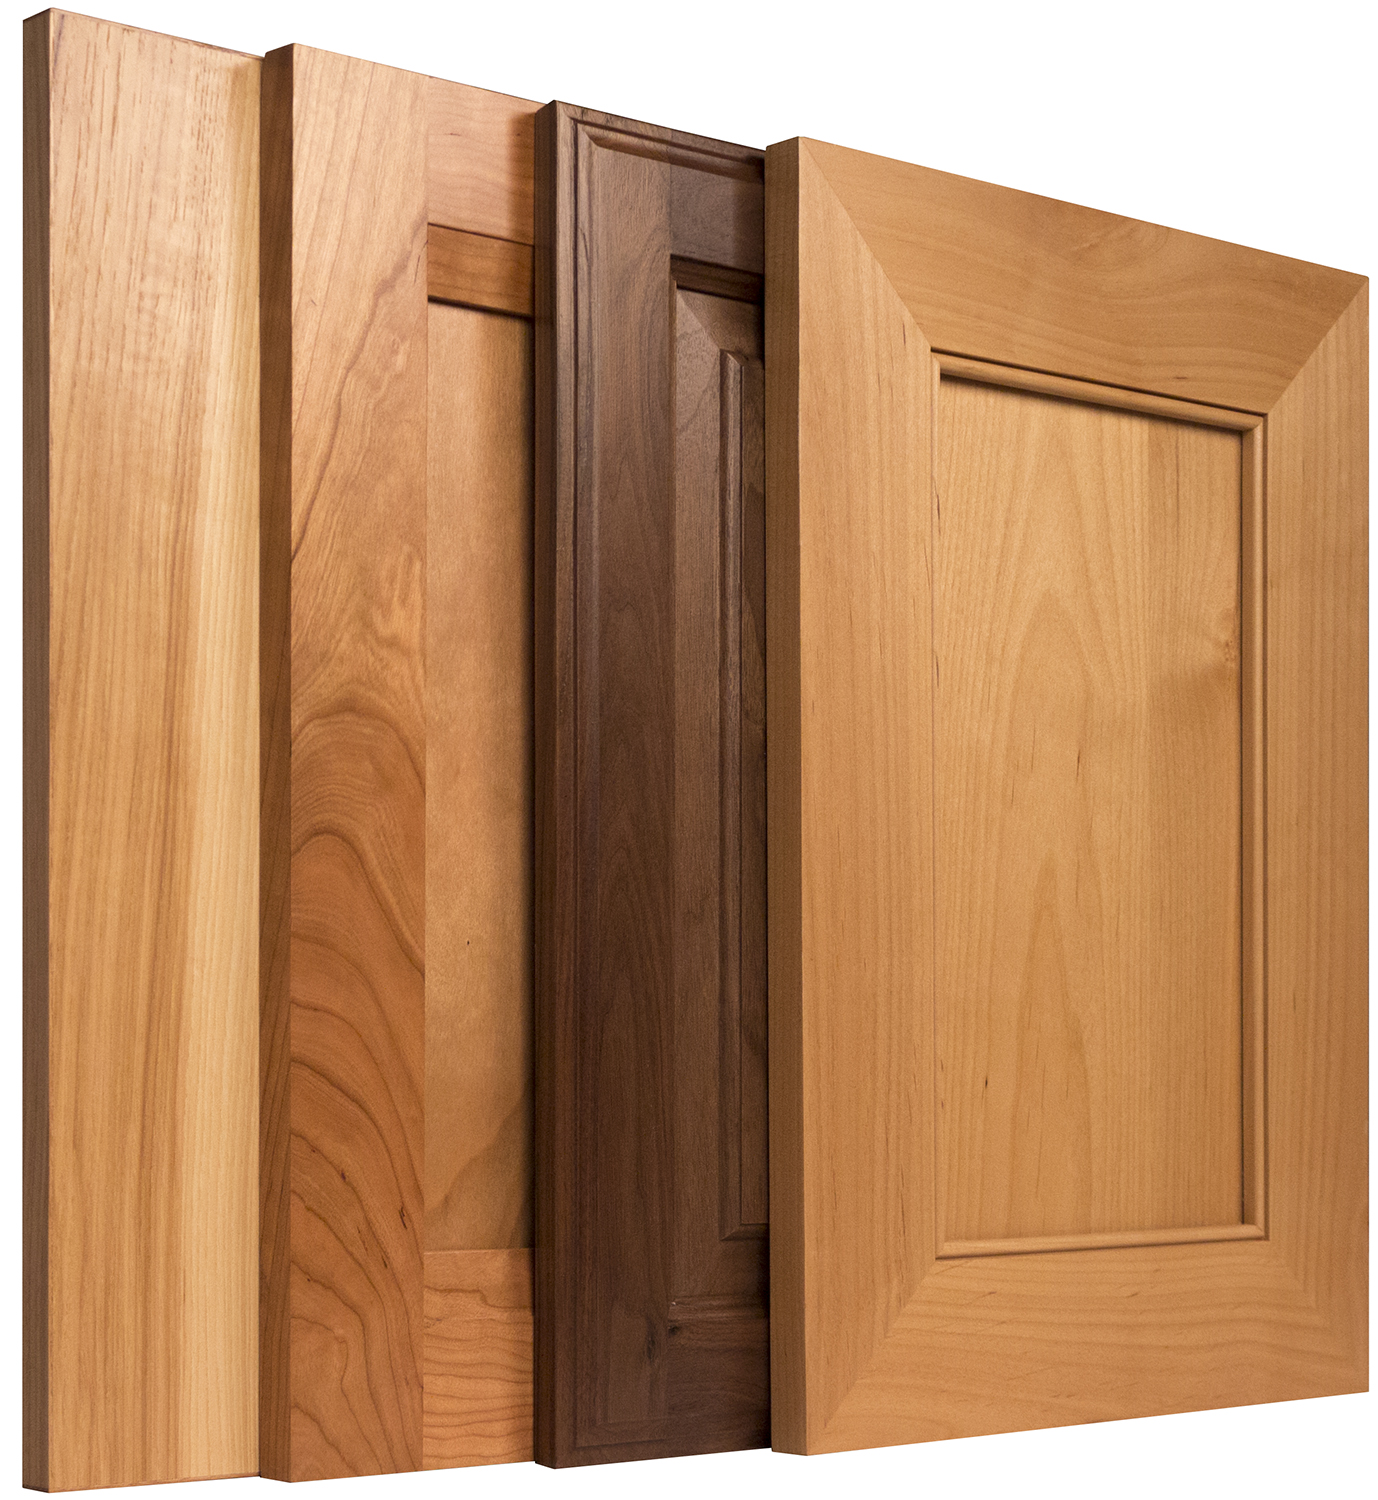 Miter Profile Cabinet Doors Woodworking Network